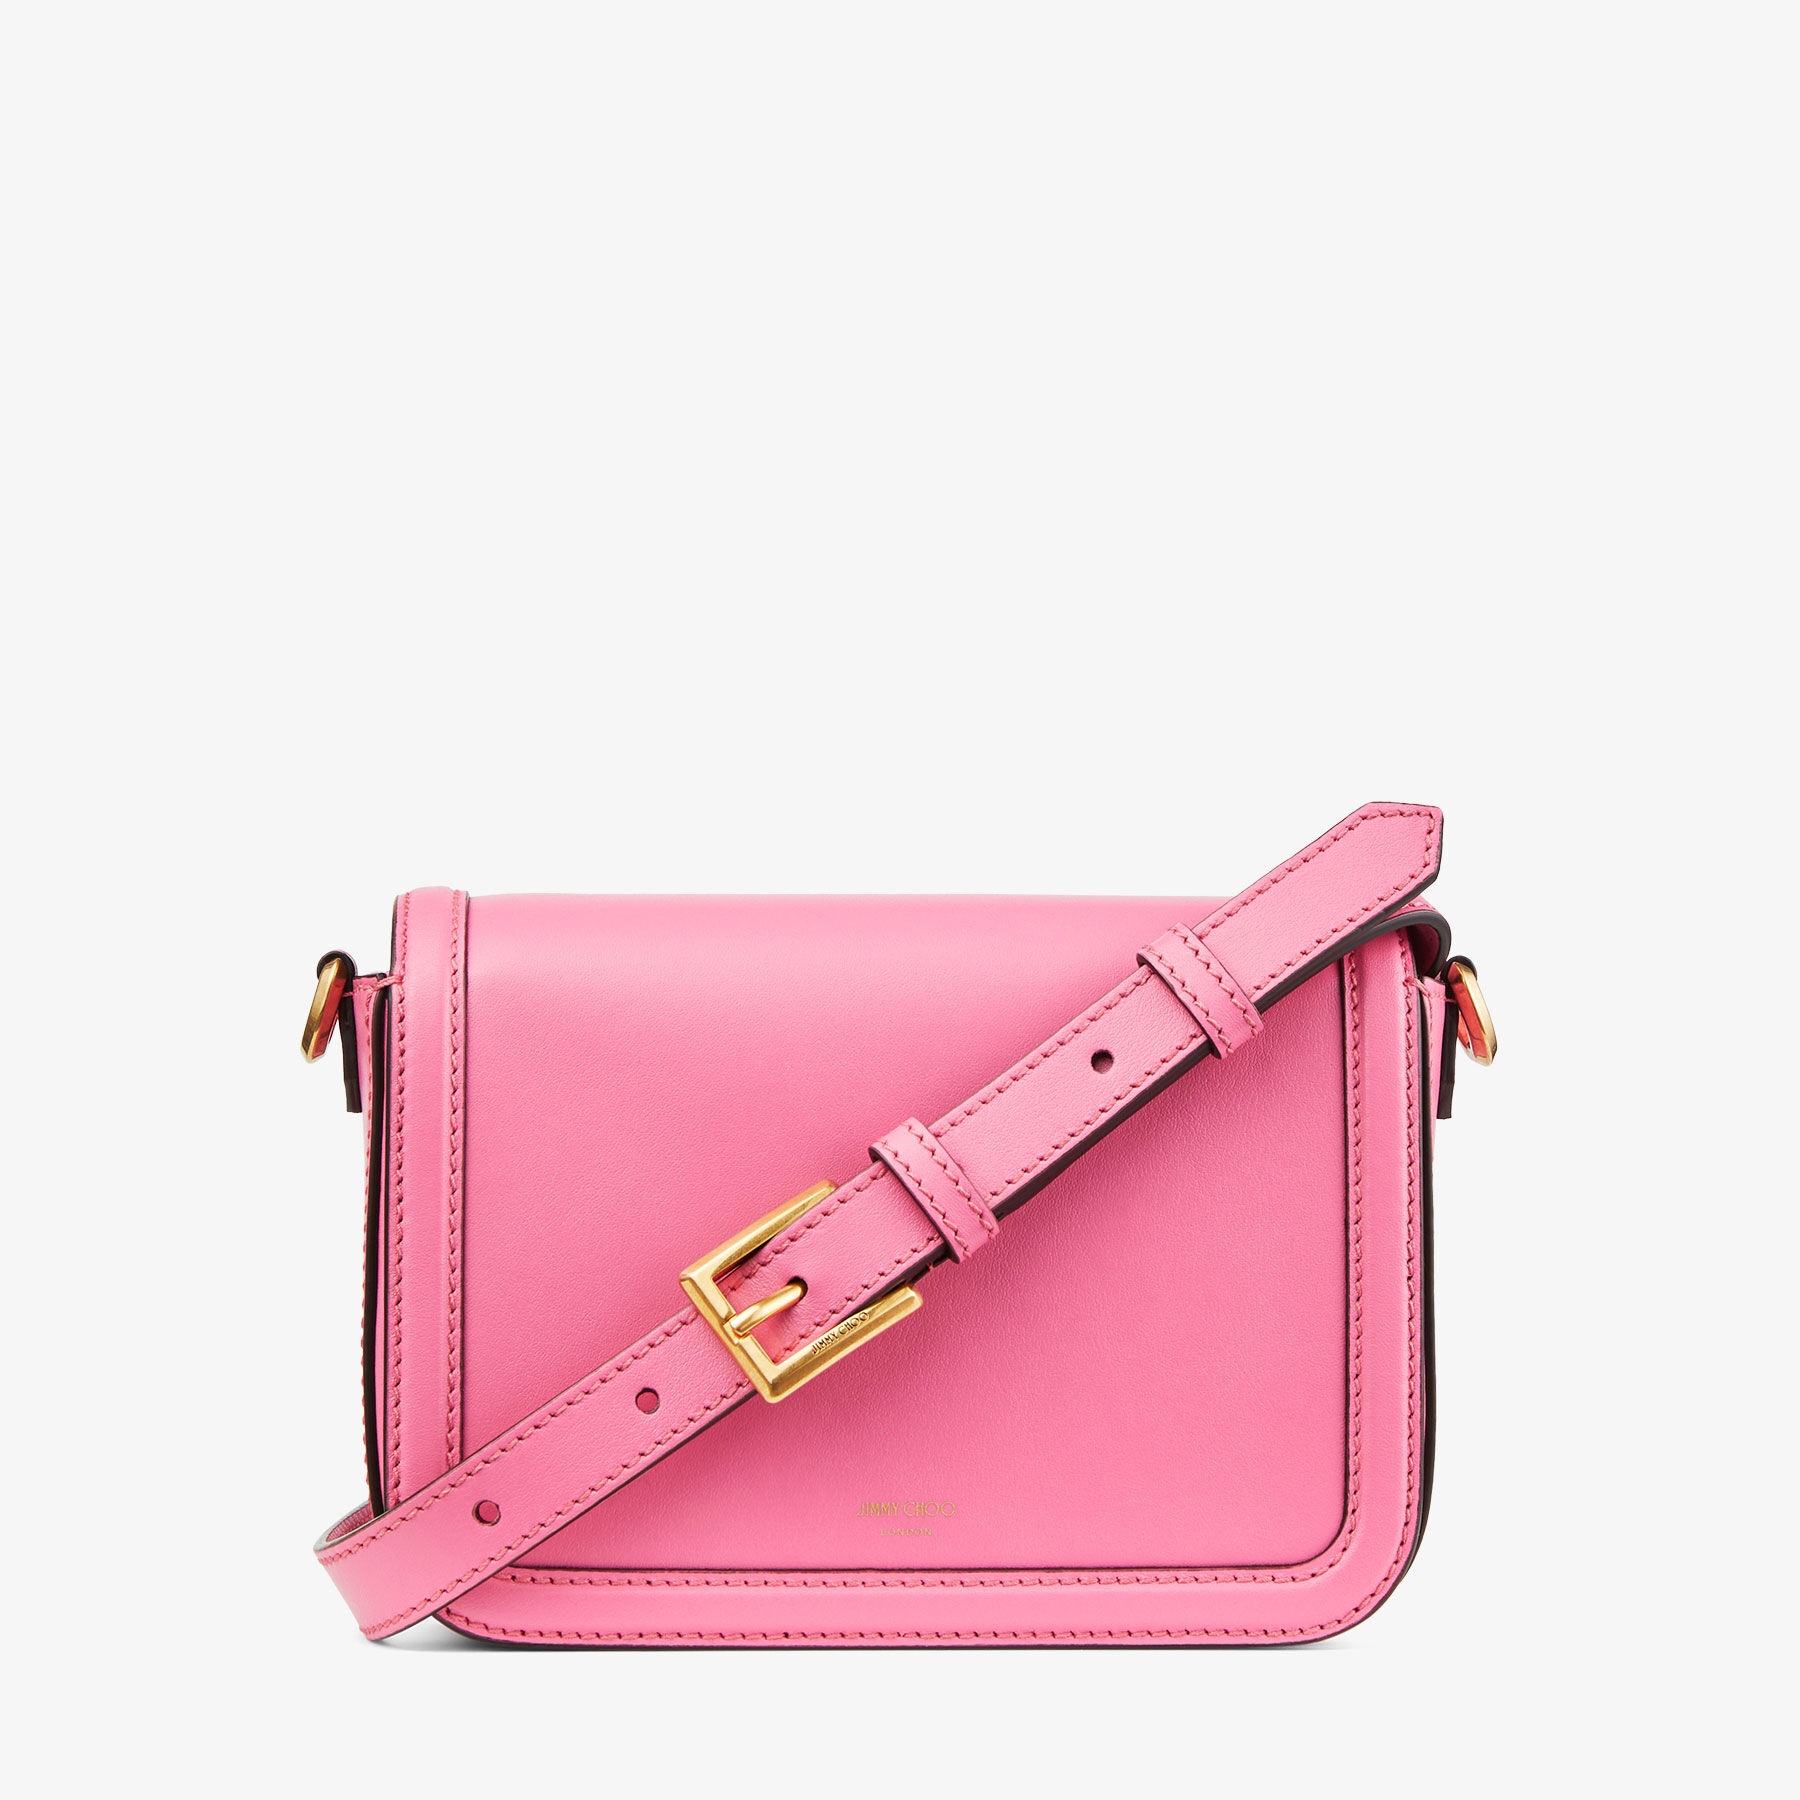 Diamond Crossbody
Candy Pink Smooth Calf Leather Top Handle Bag - 6